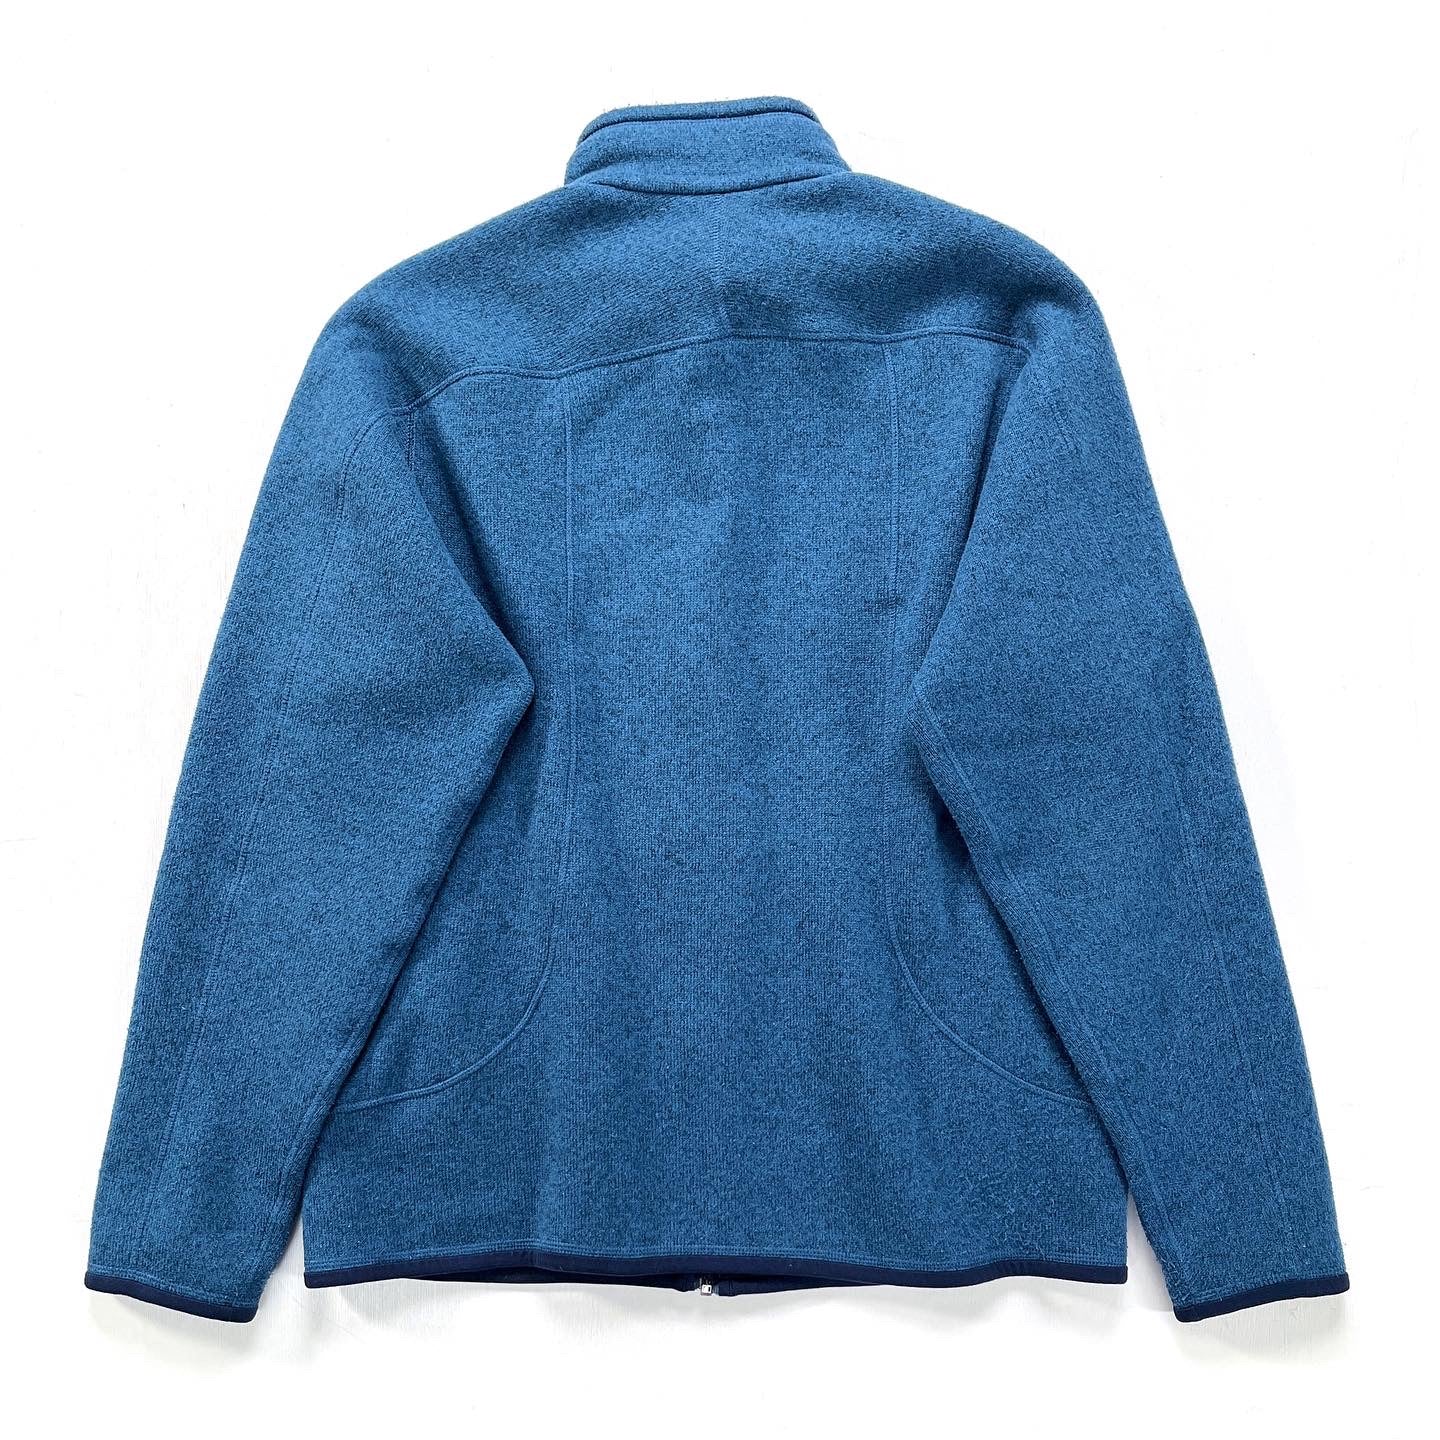 2014 Patagonia Mens Better Sweater Full-Zip Fleece Jacket, Blue (M)